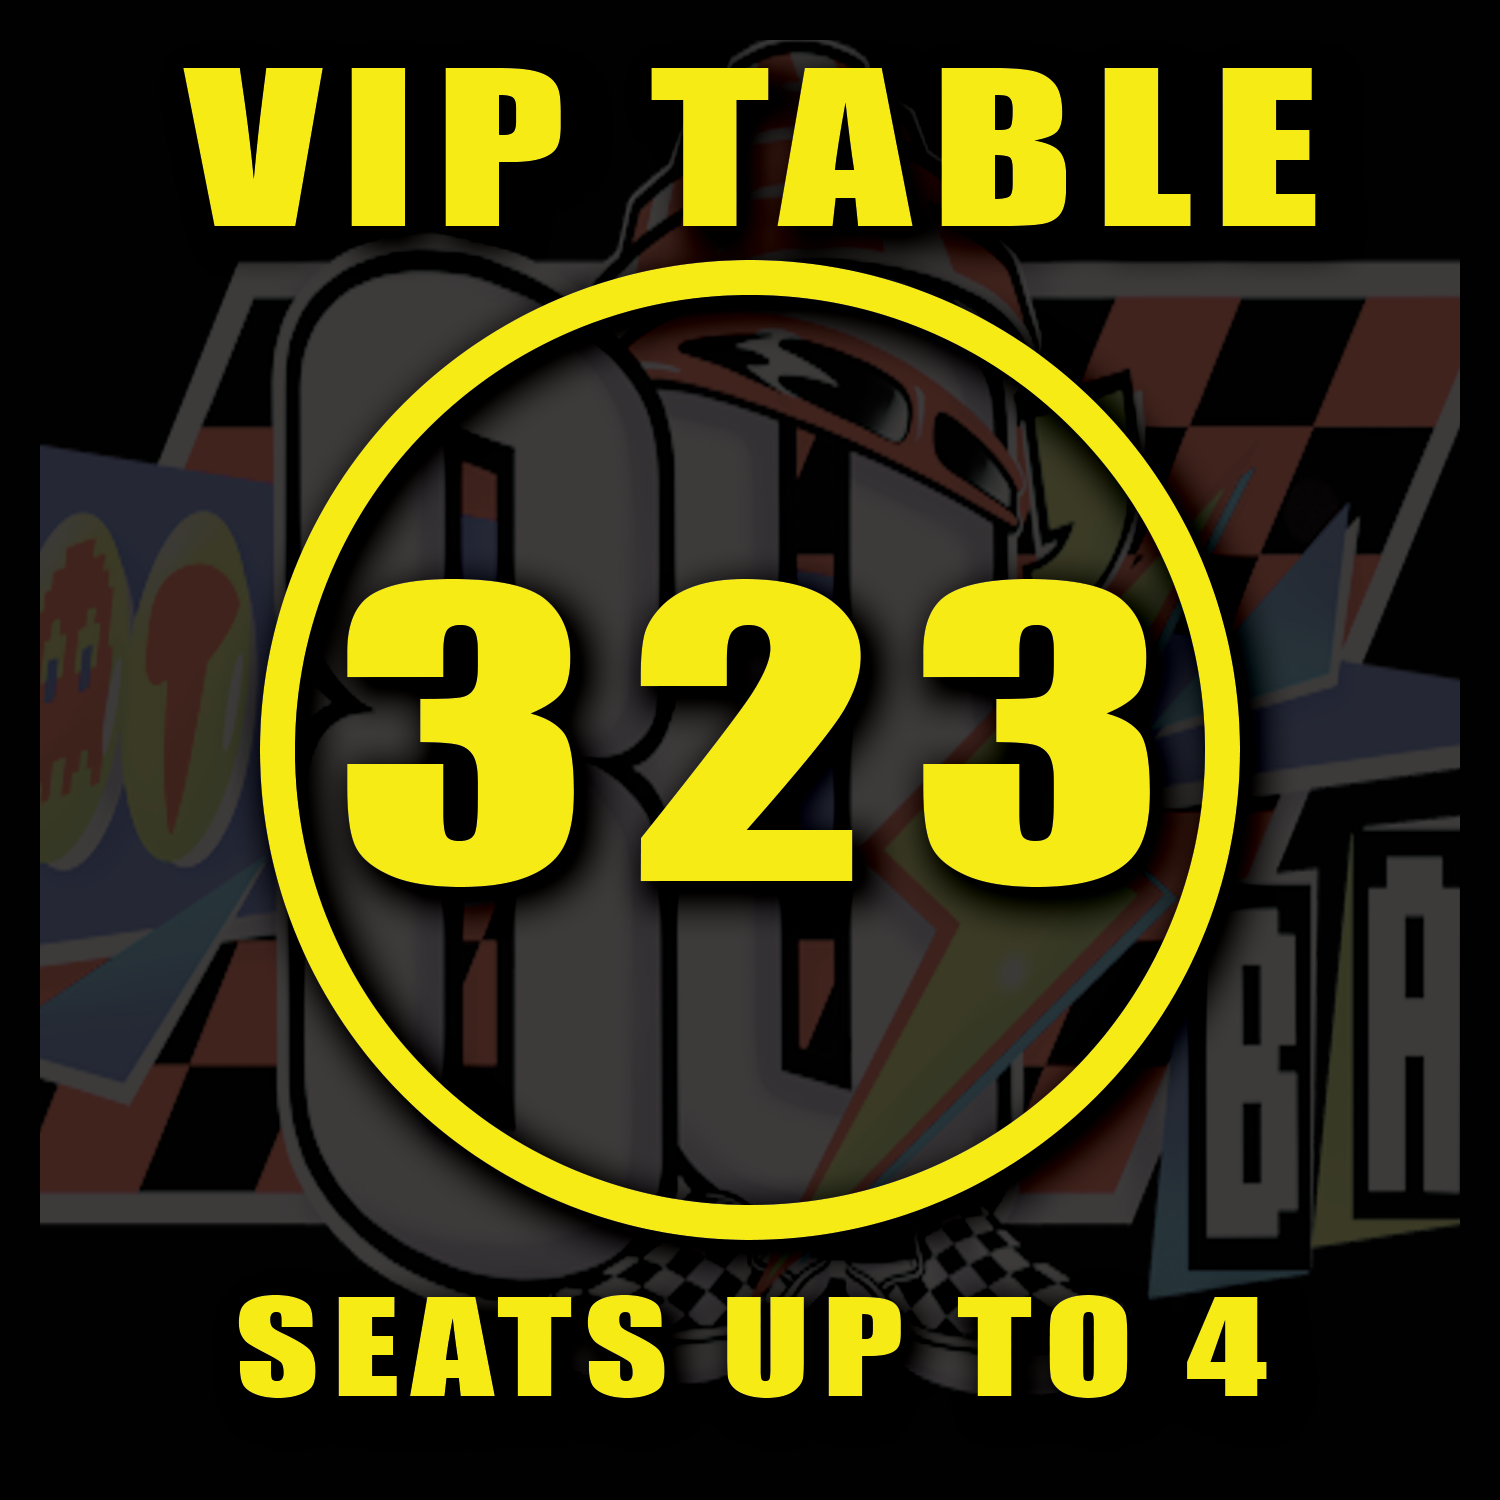 VIP TABLE 323